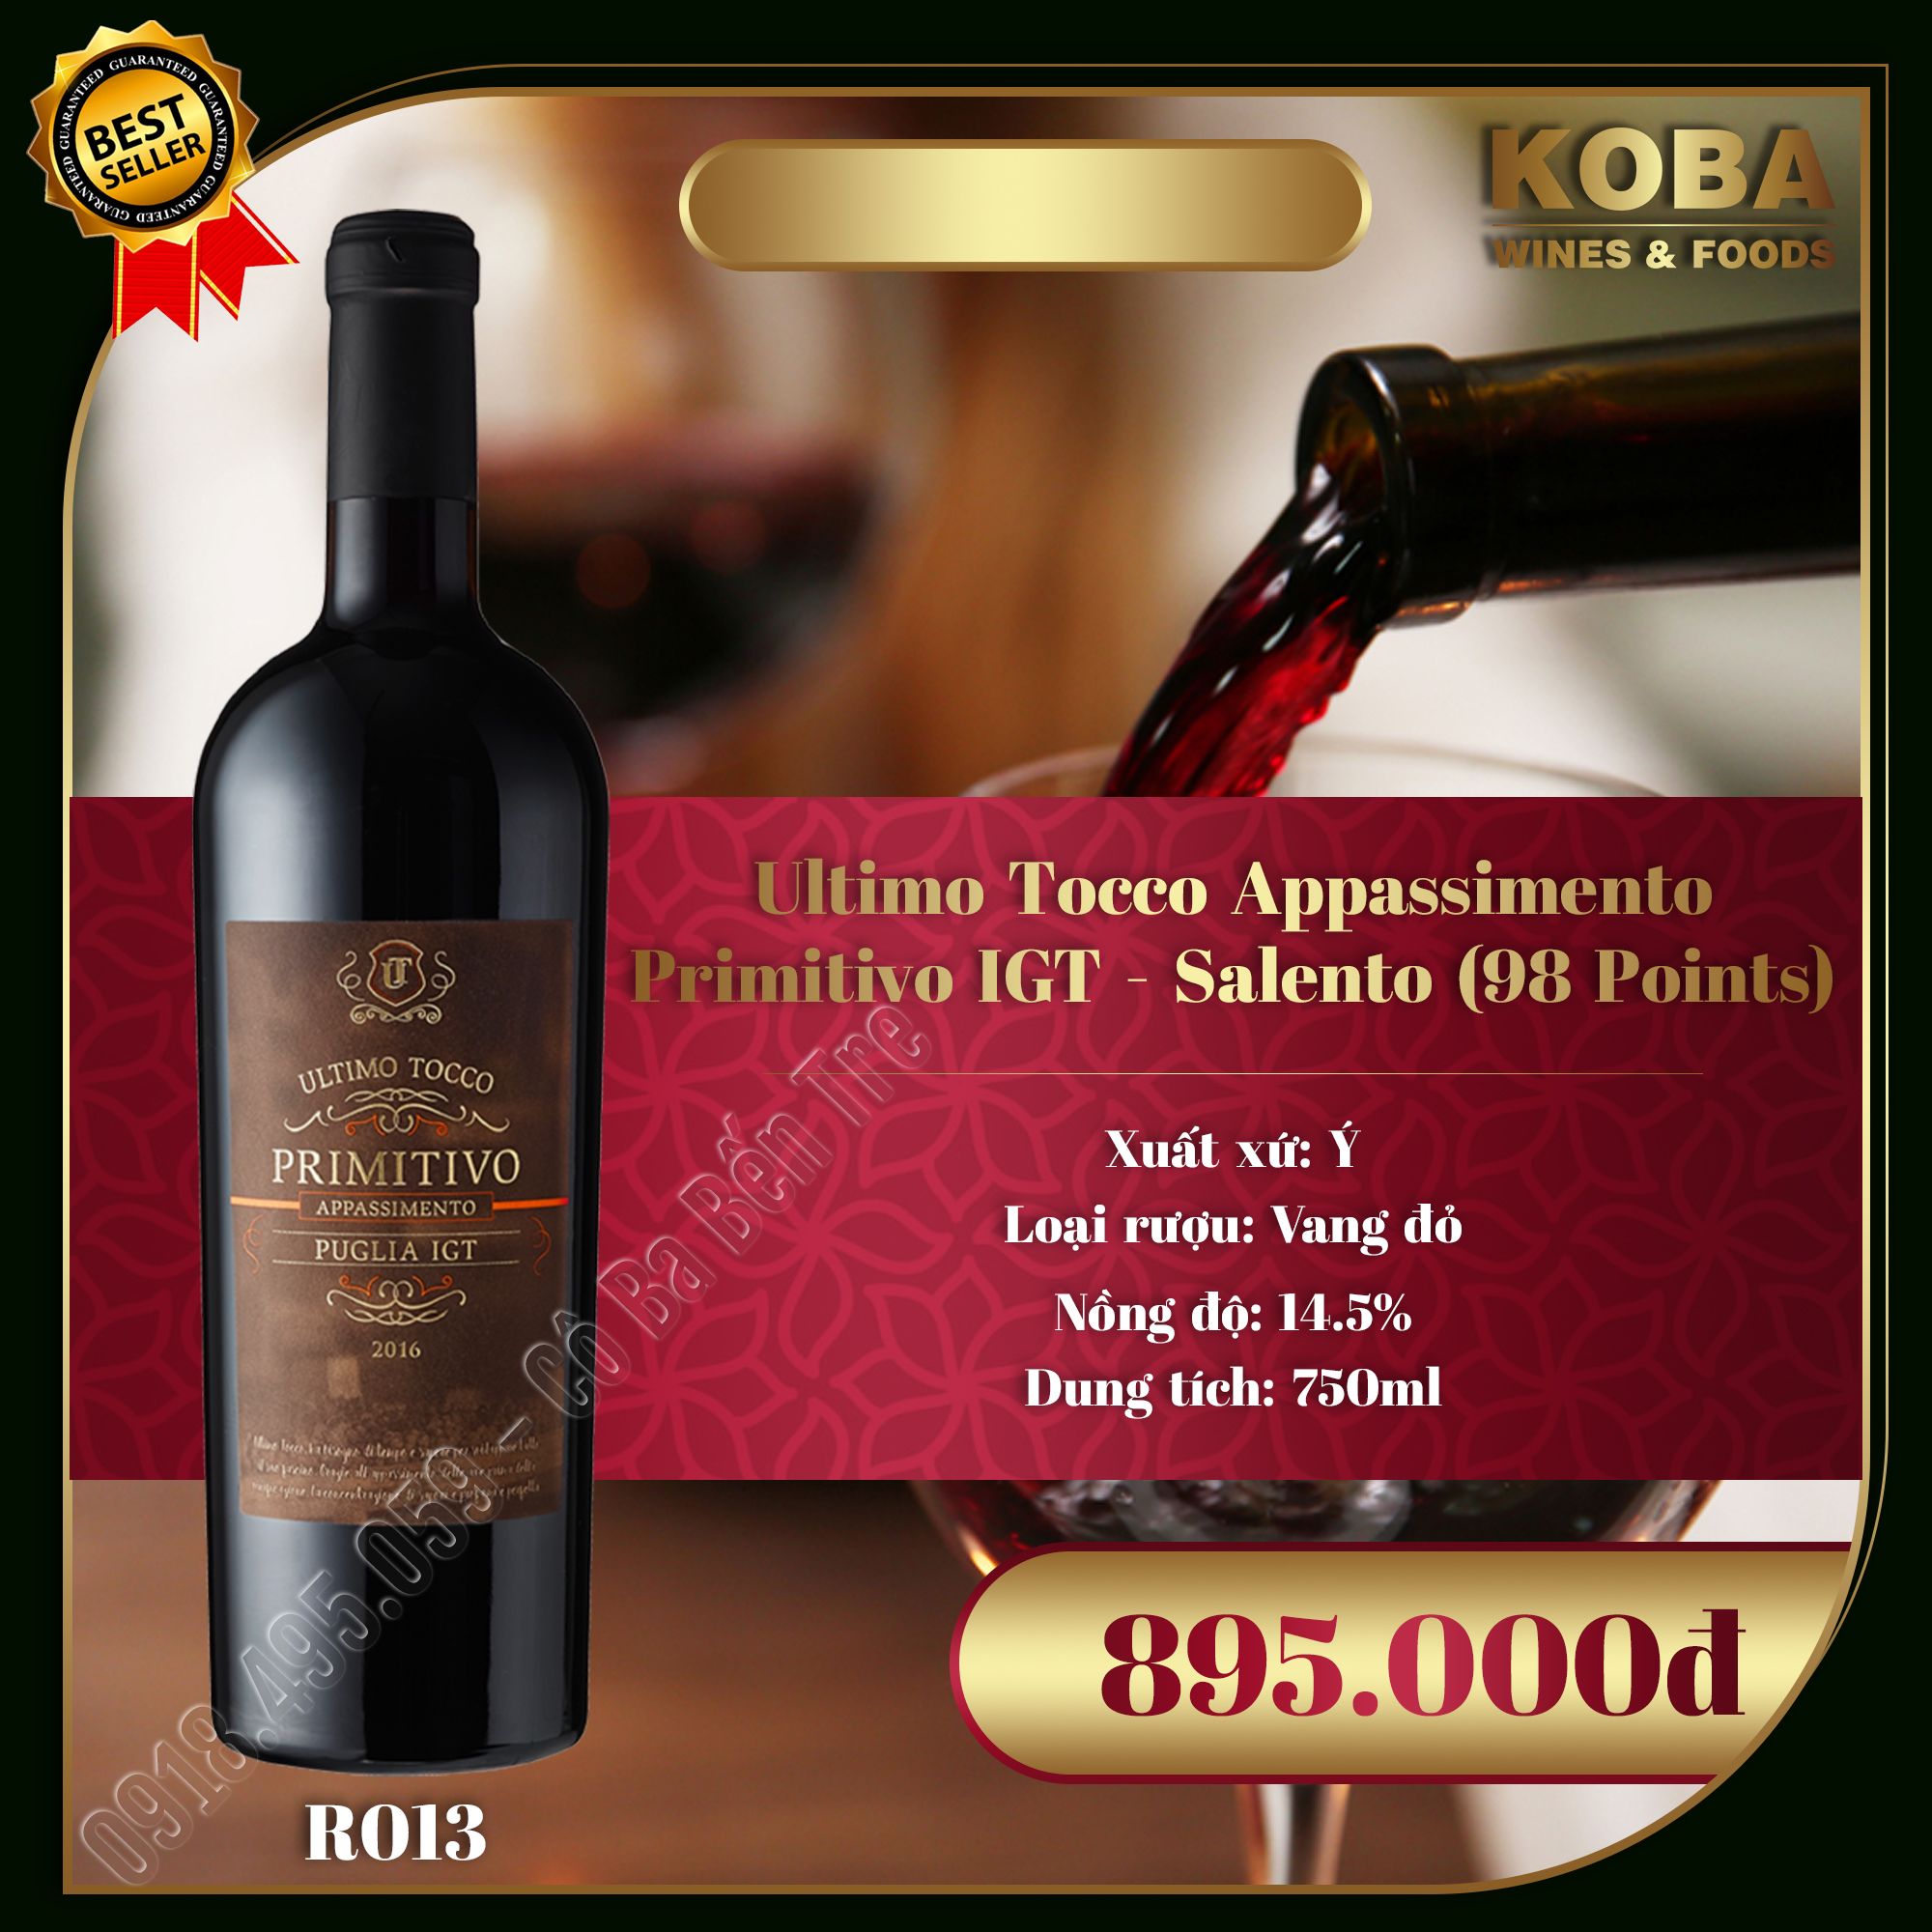 Rượu Vang Đỏ Ultimo Tocco Appassimento Primitivo IGT - Salento (98 Points) - 14.5 độ